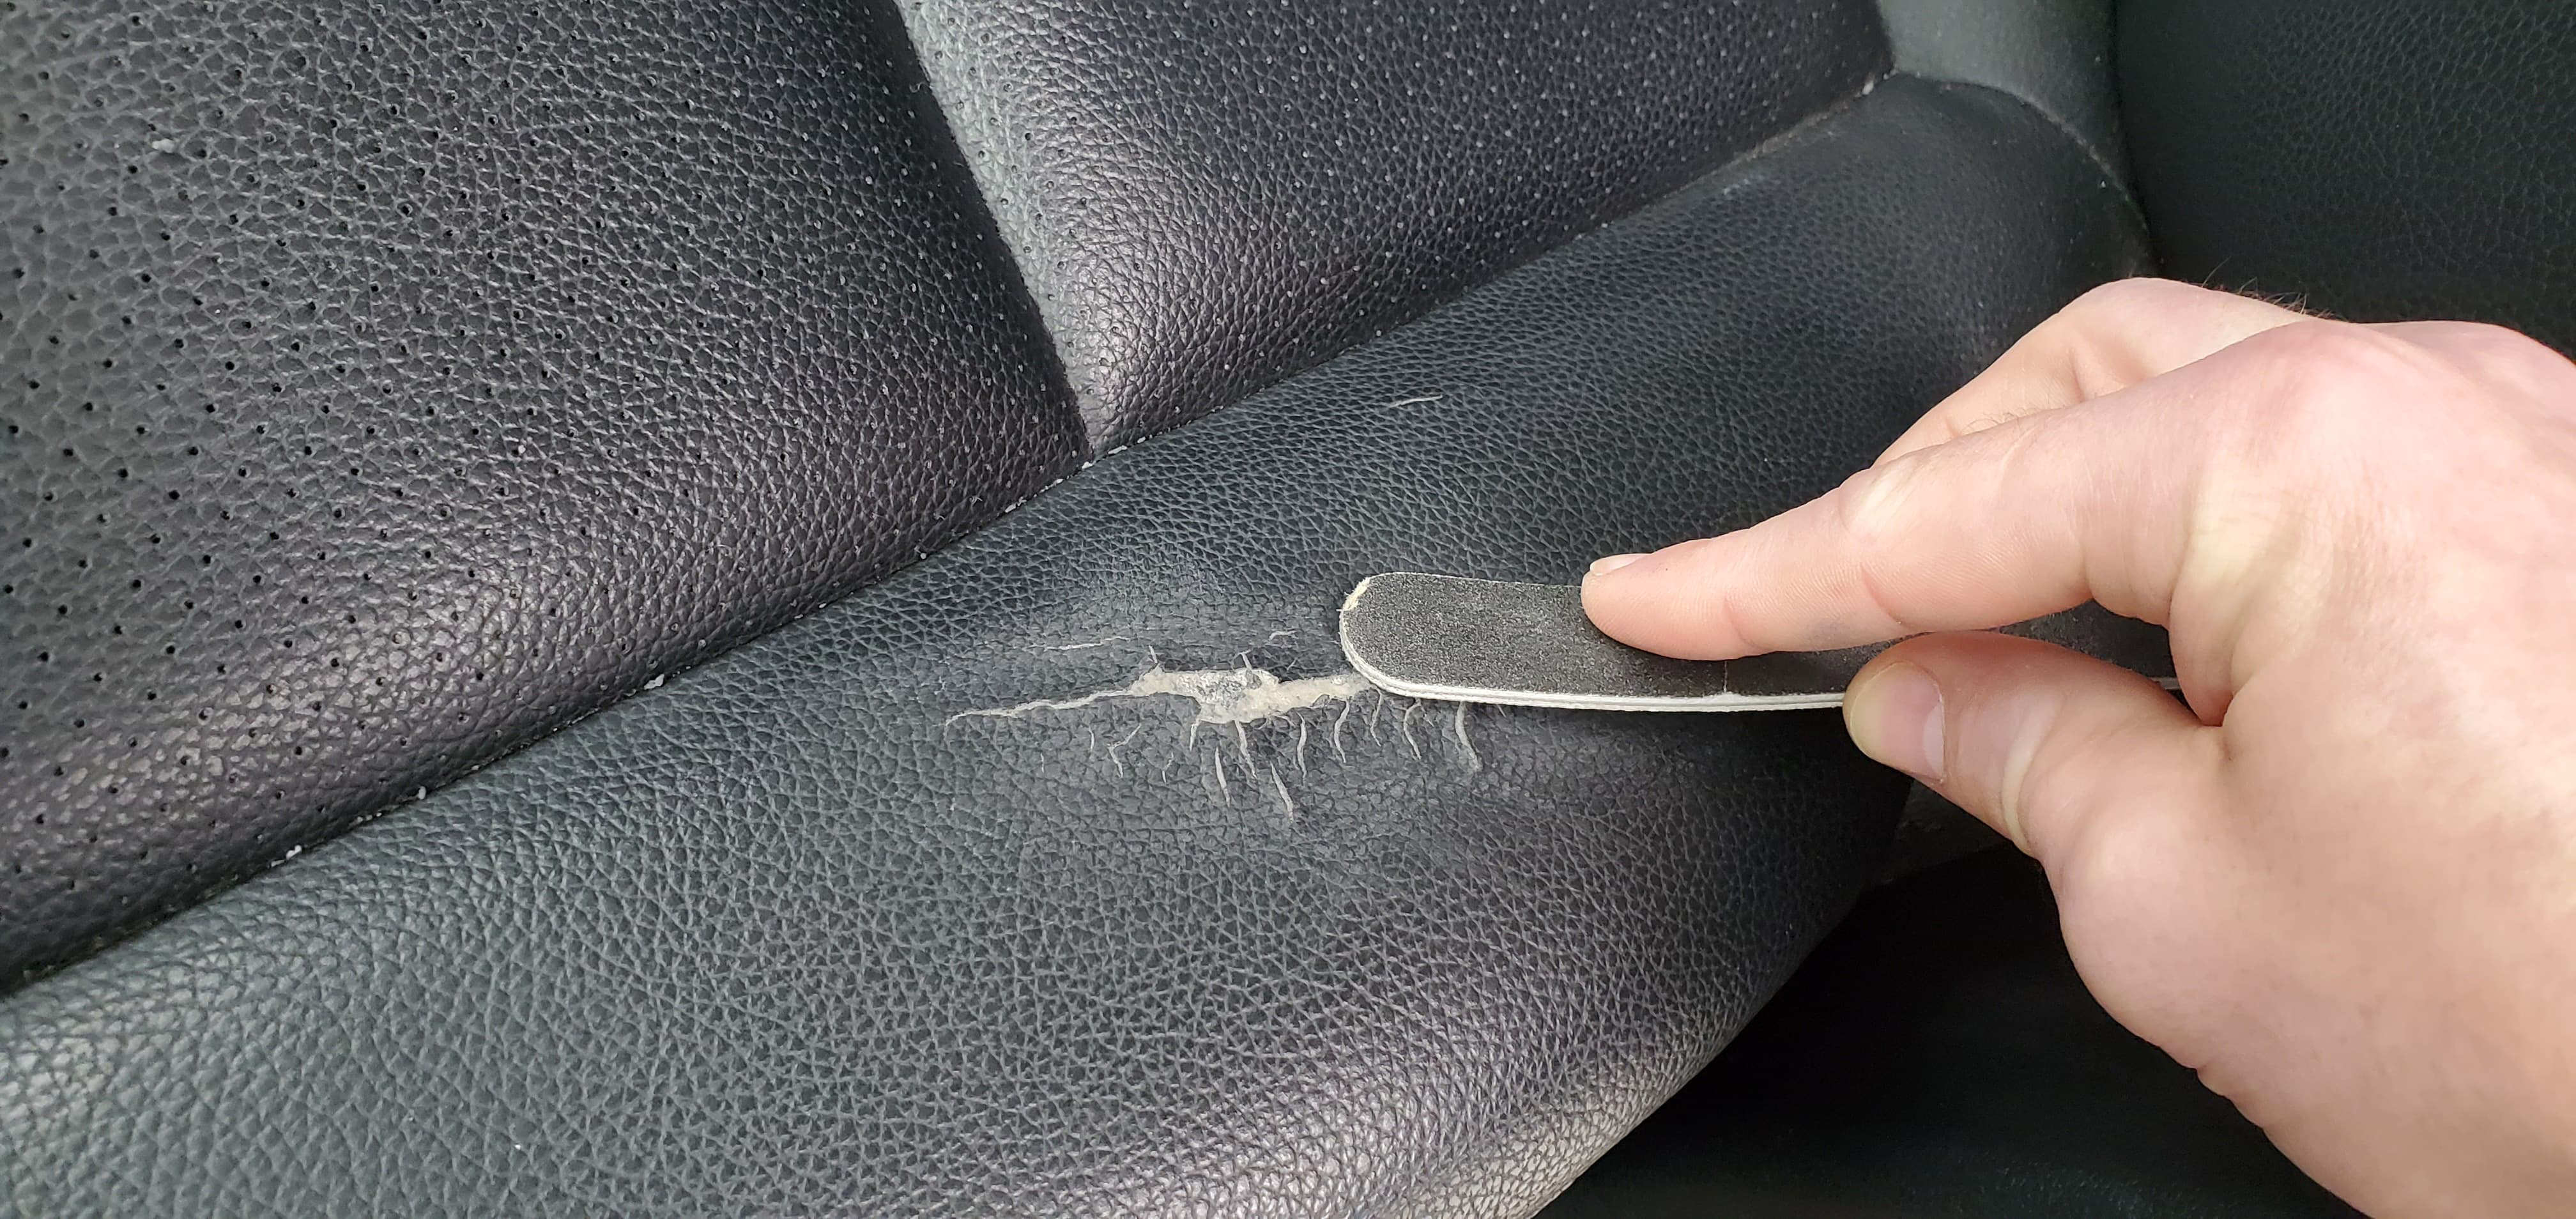 Mercedes Leather Car Seat Repairs